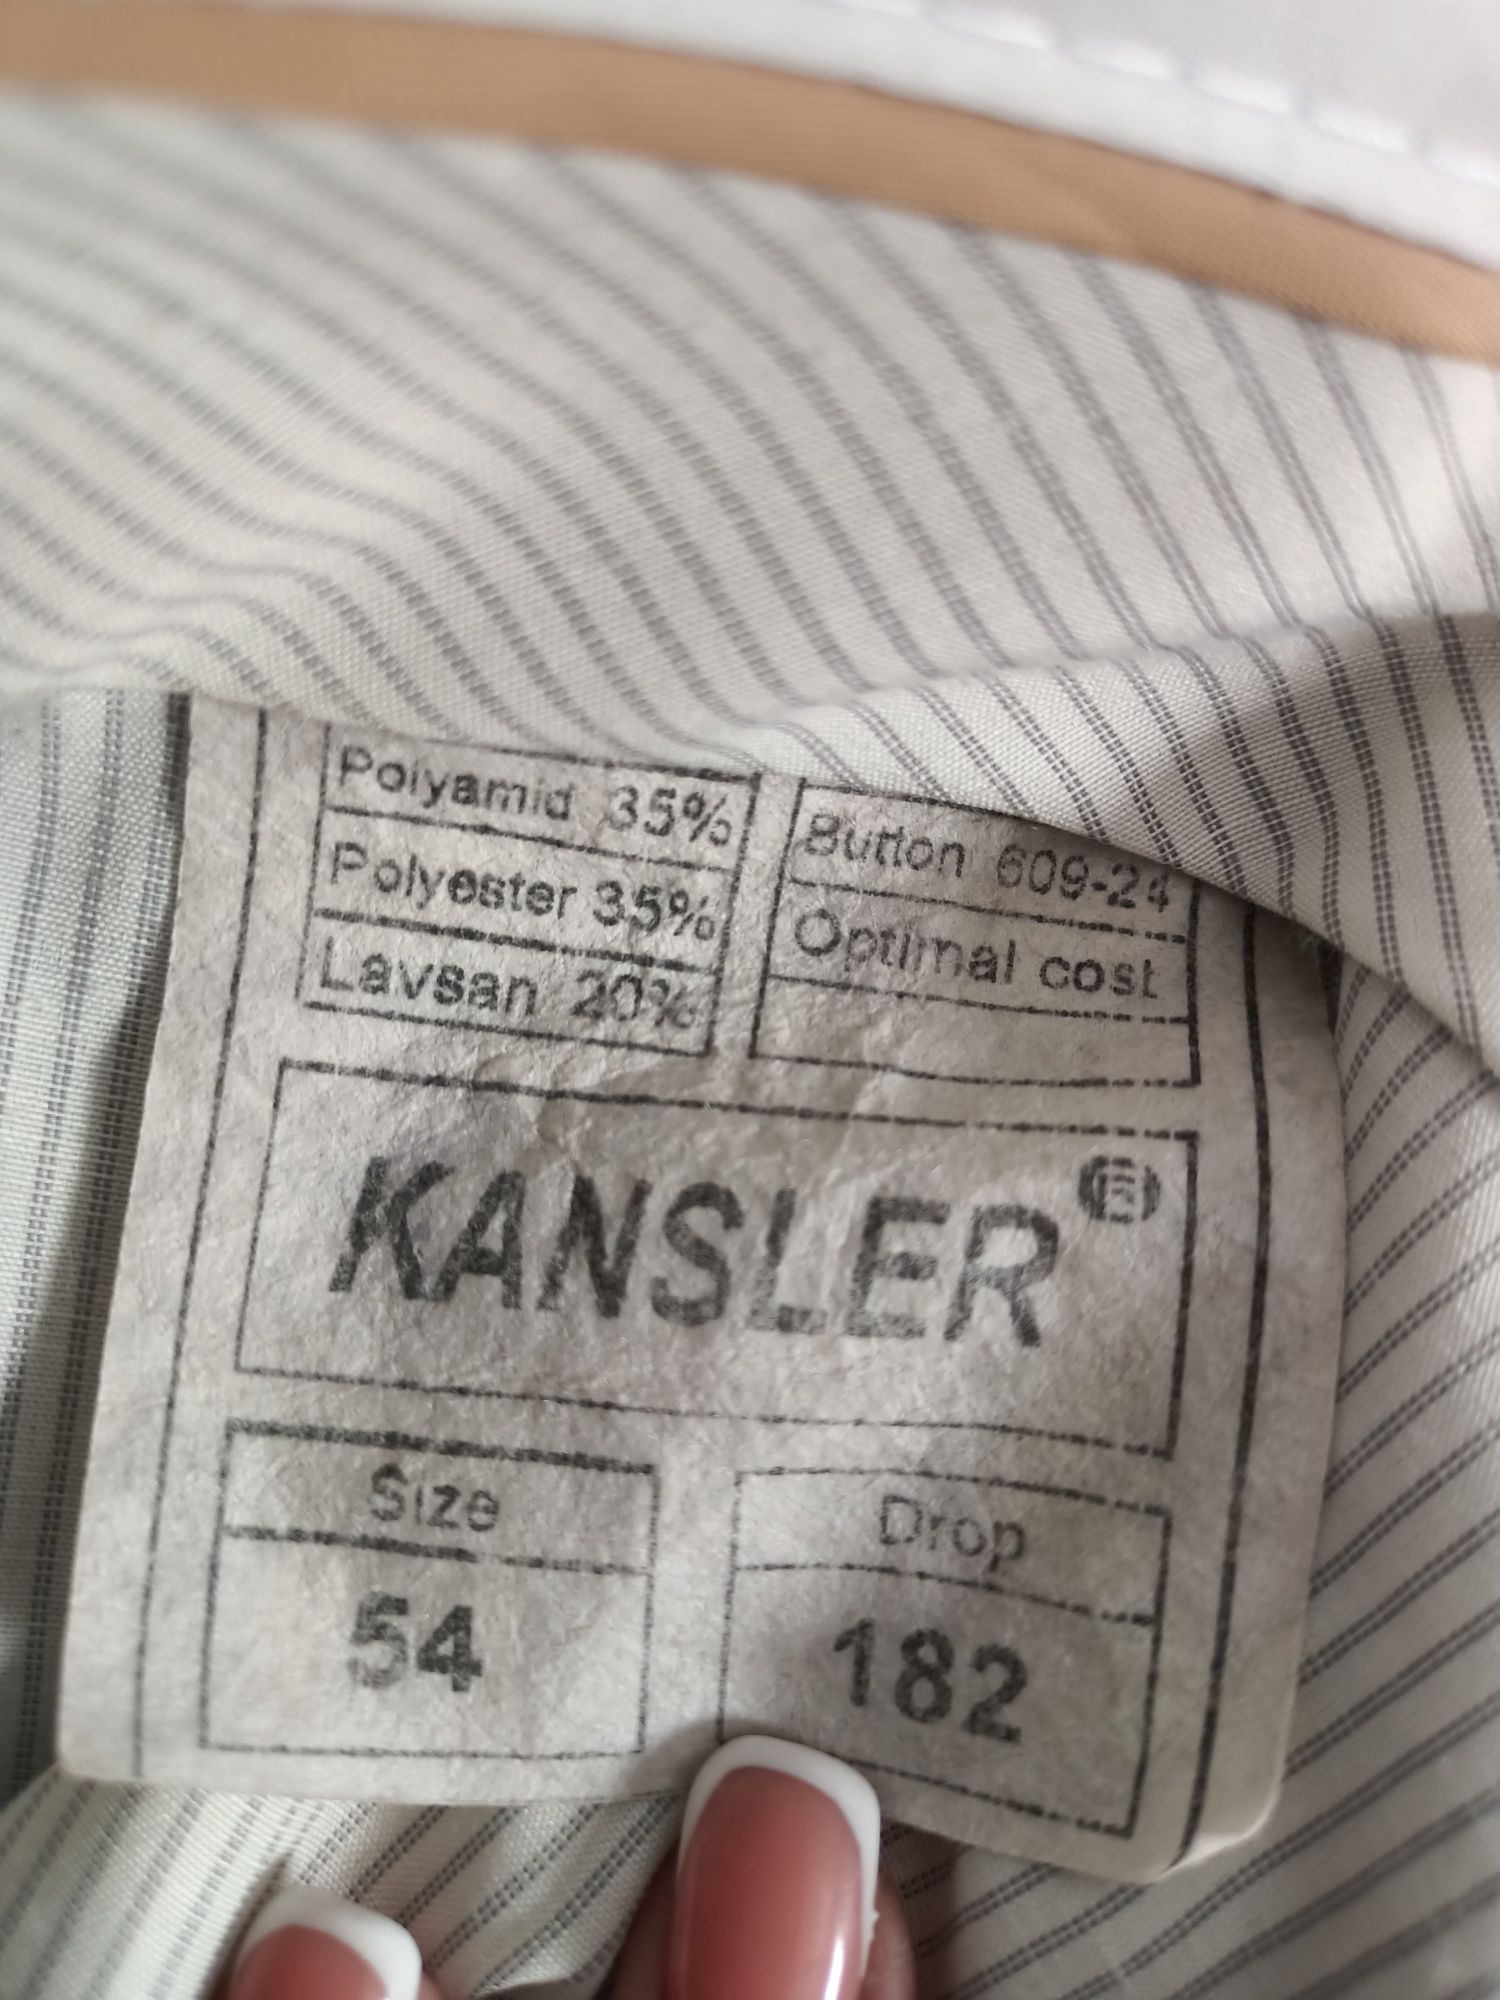 Мужской костюм Kansler